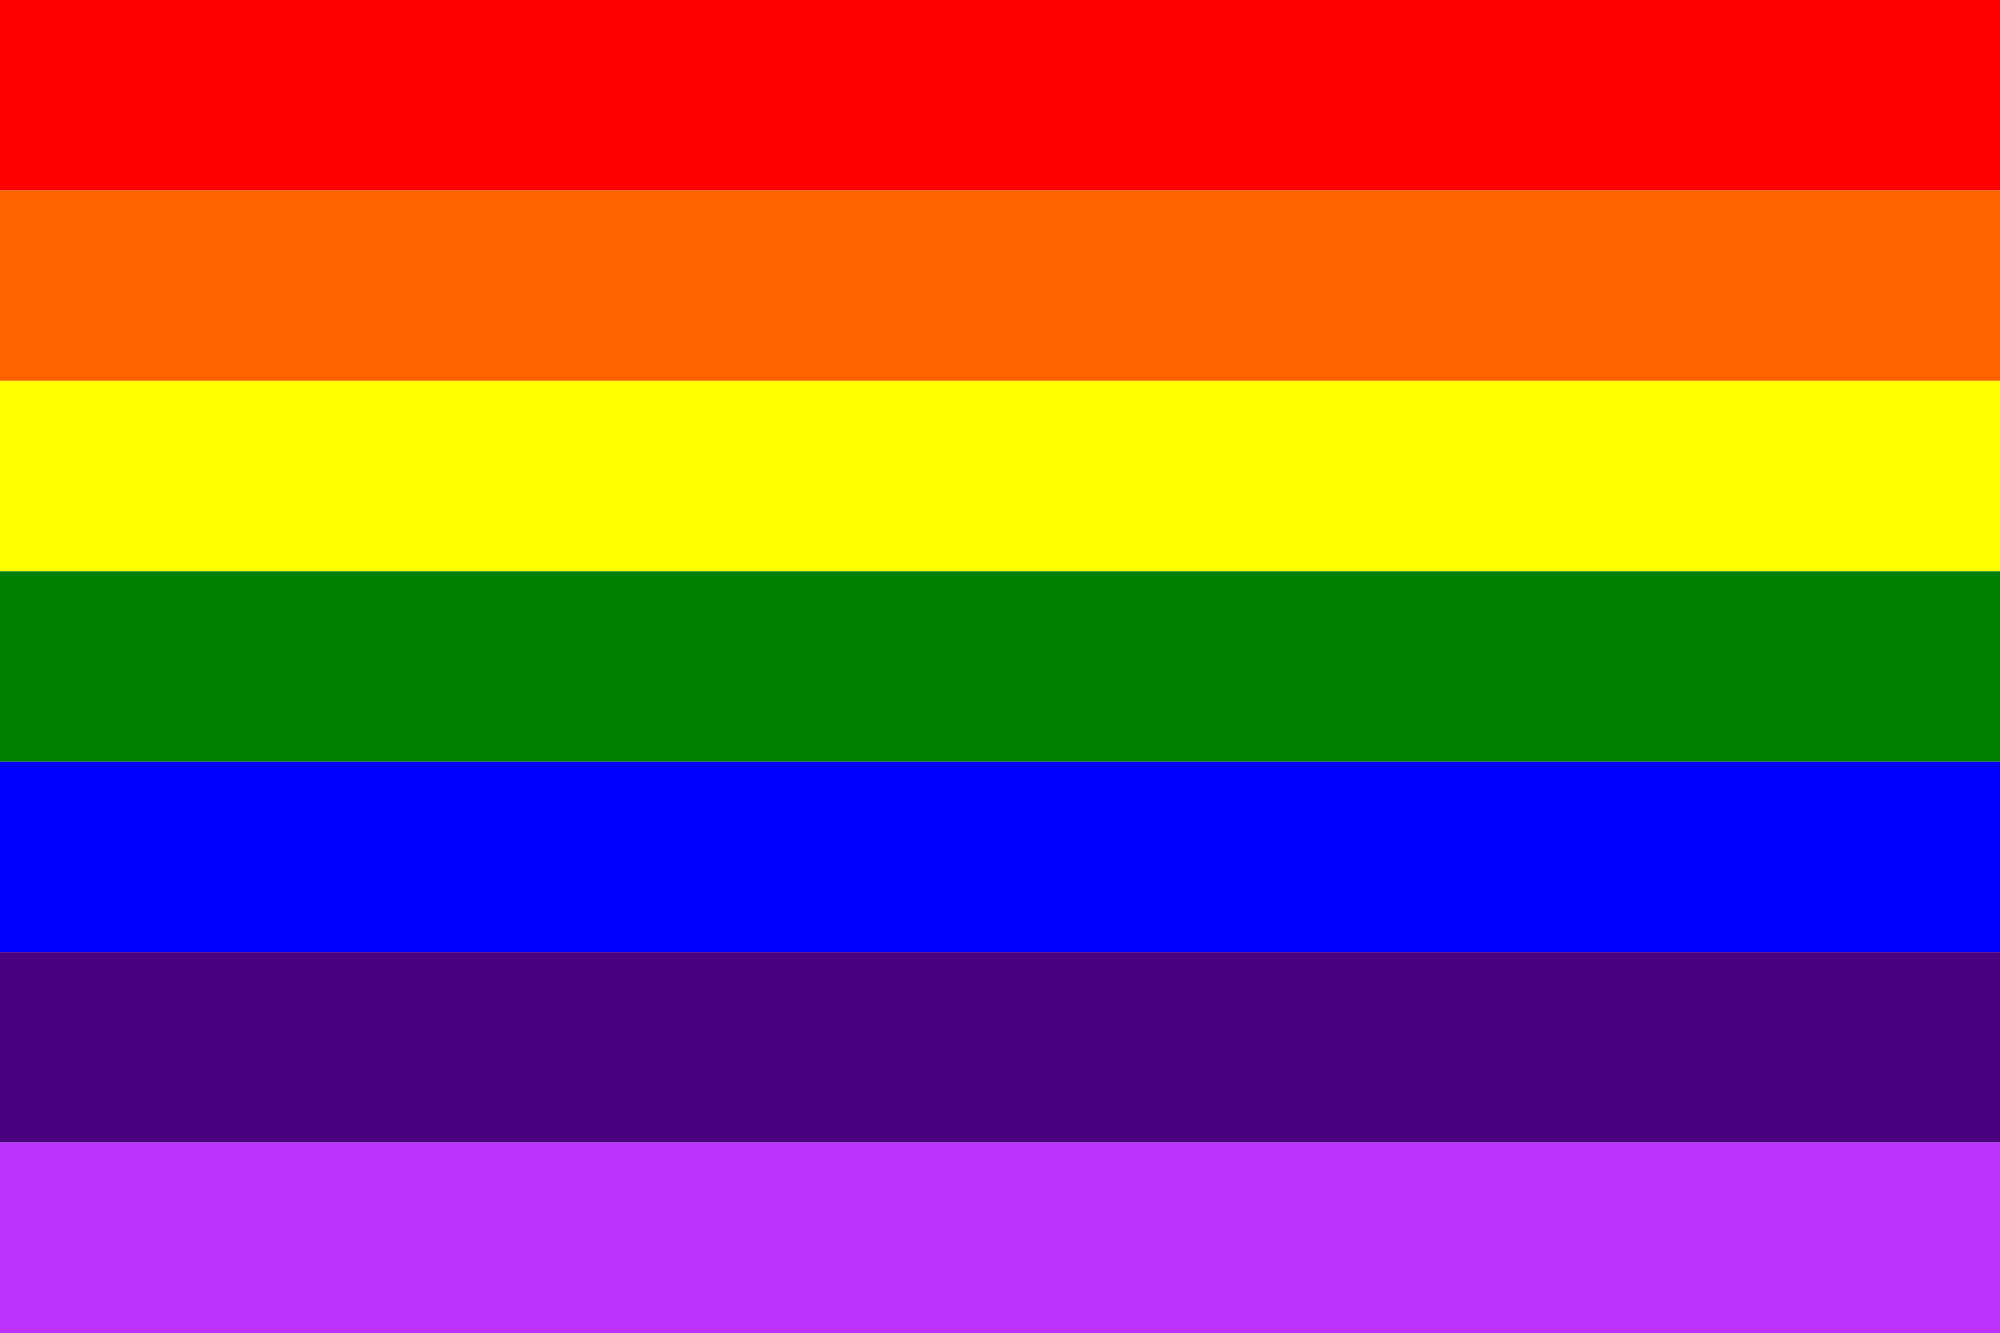 free download gay pride flag